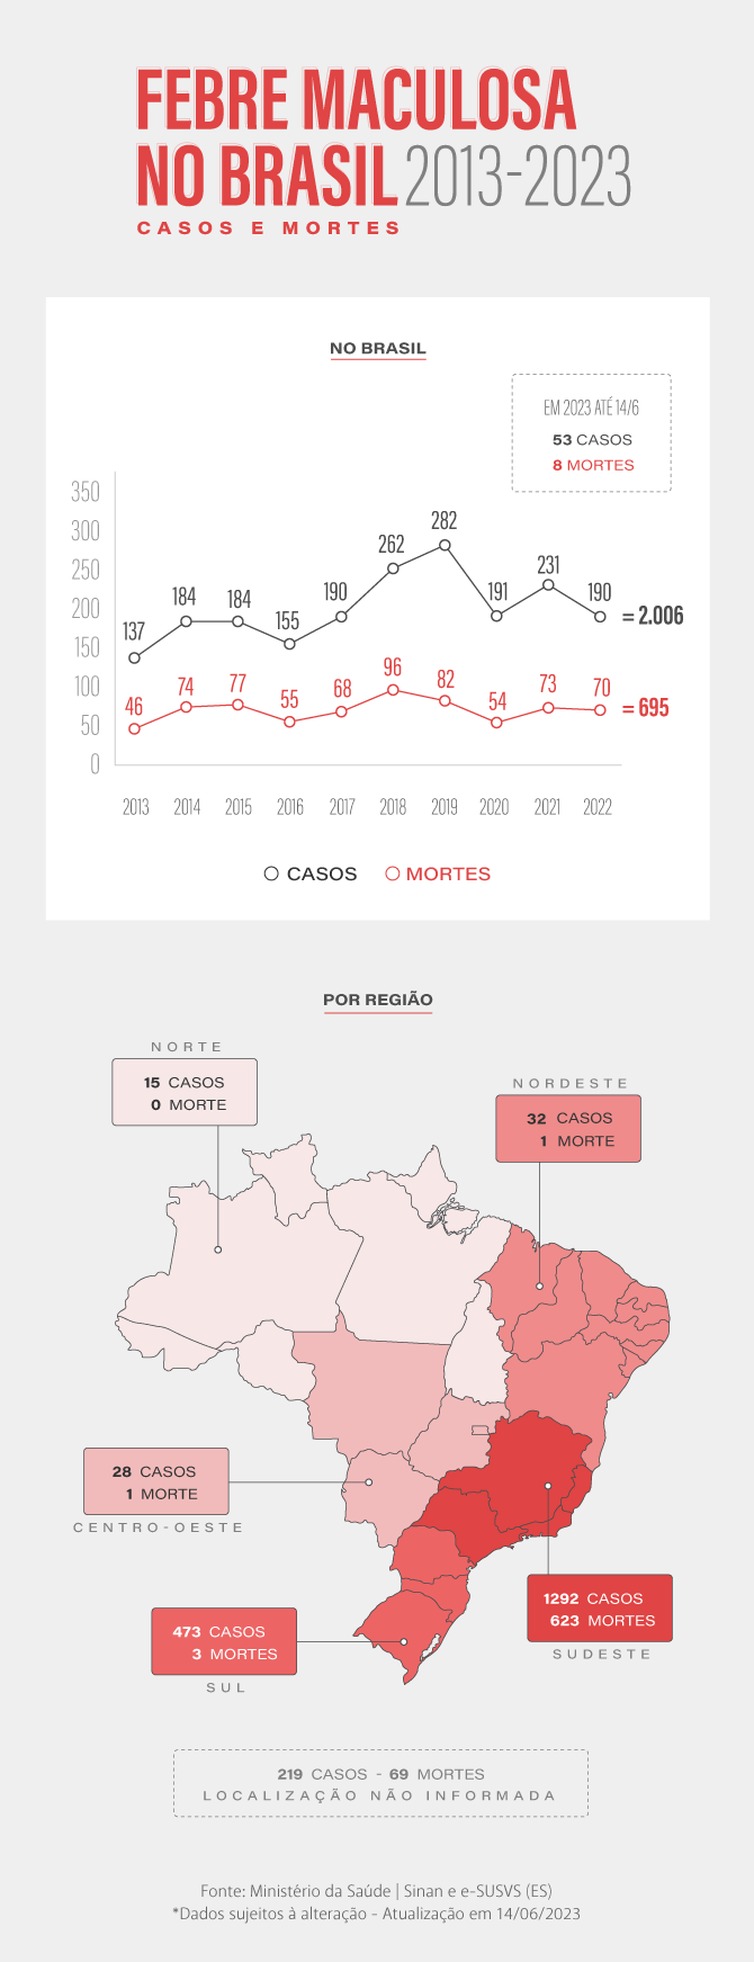 Febre maculosa no Brasil